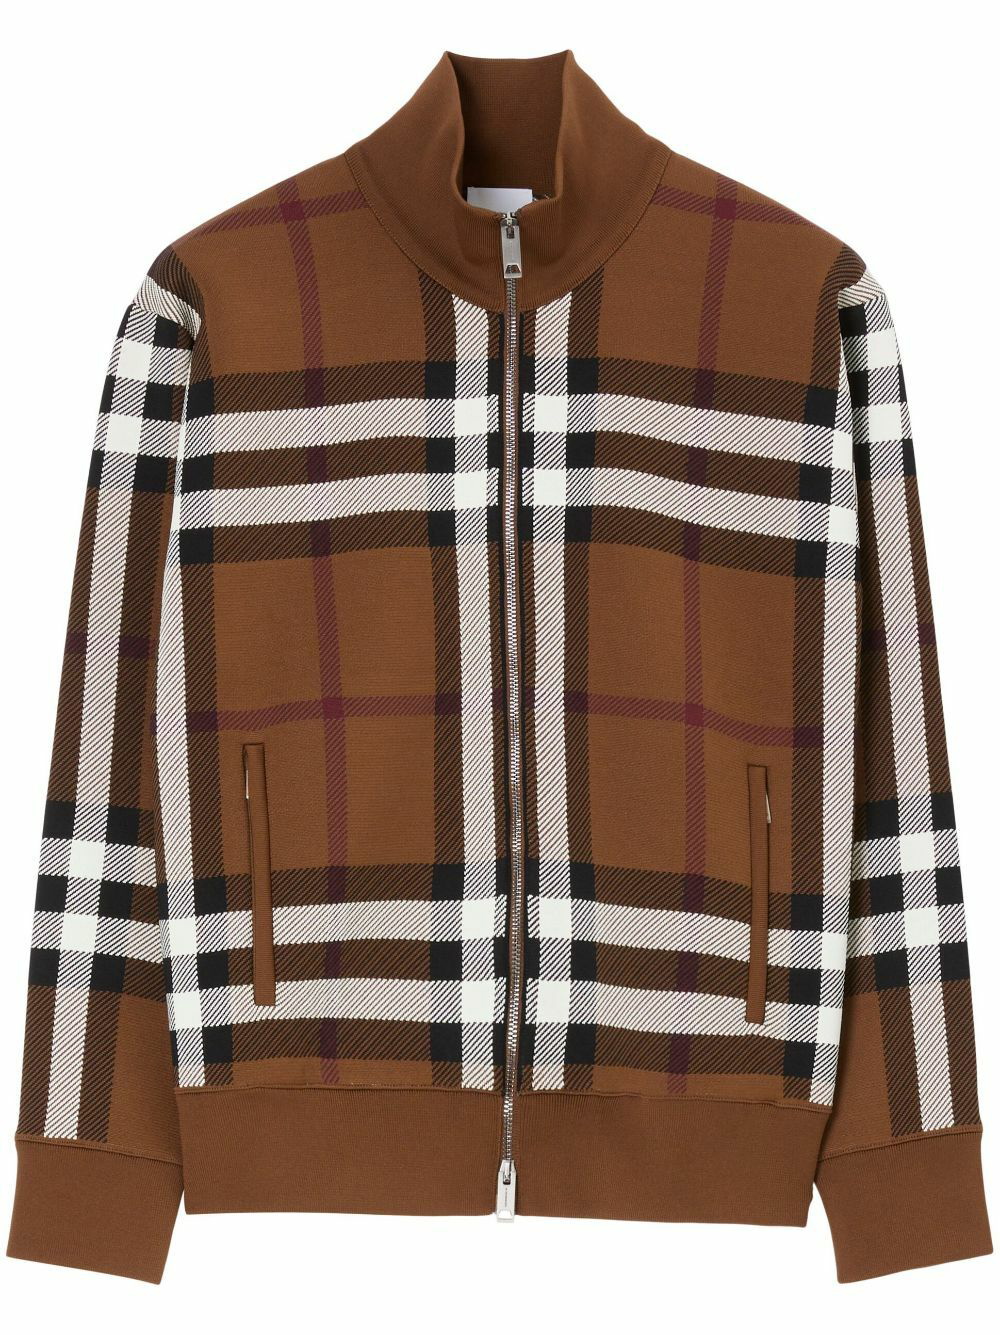 BURBERRY - Check Motif Zipped Jacket Burberry